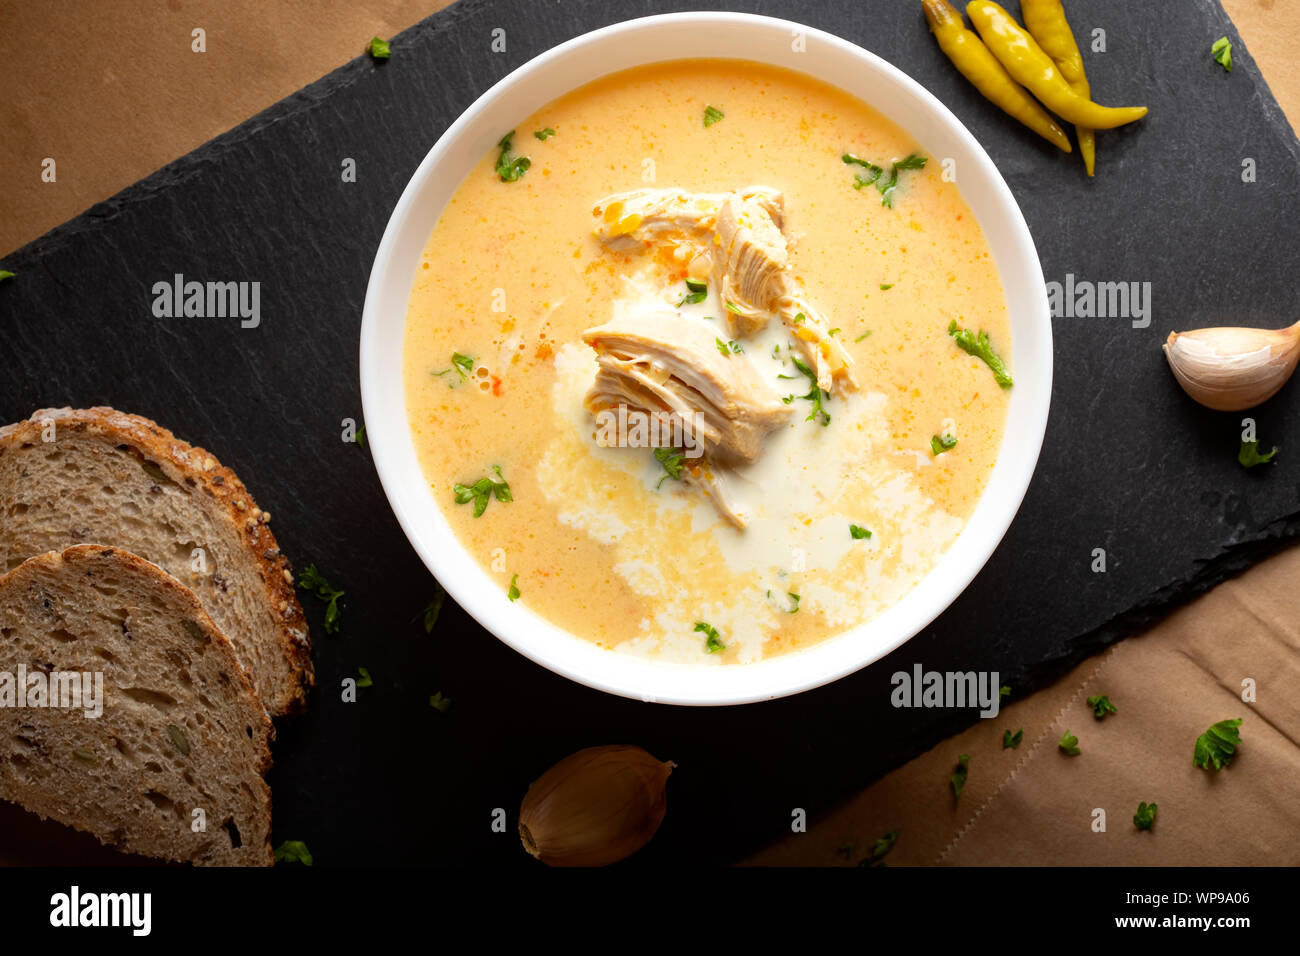 Ciorba radauteana - Romanian traditional chicken soup with cream and garlic - top view Stock Photo